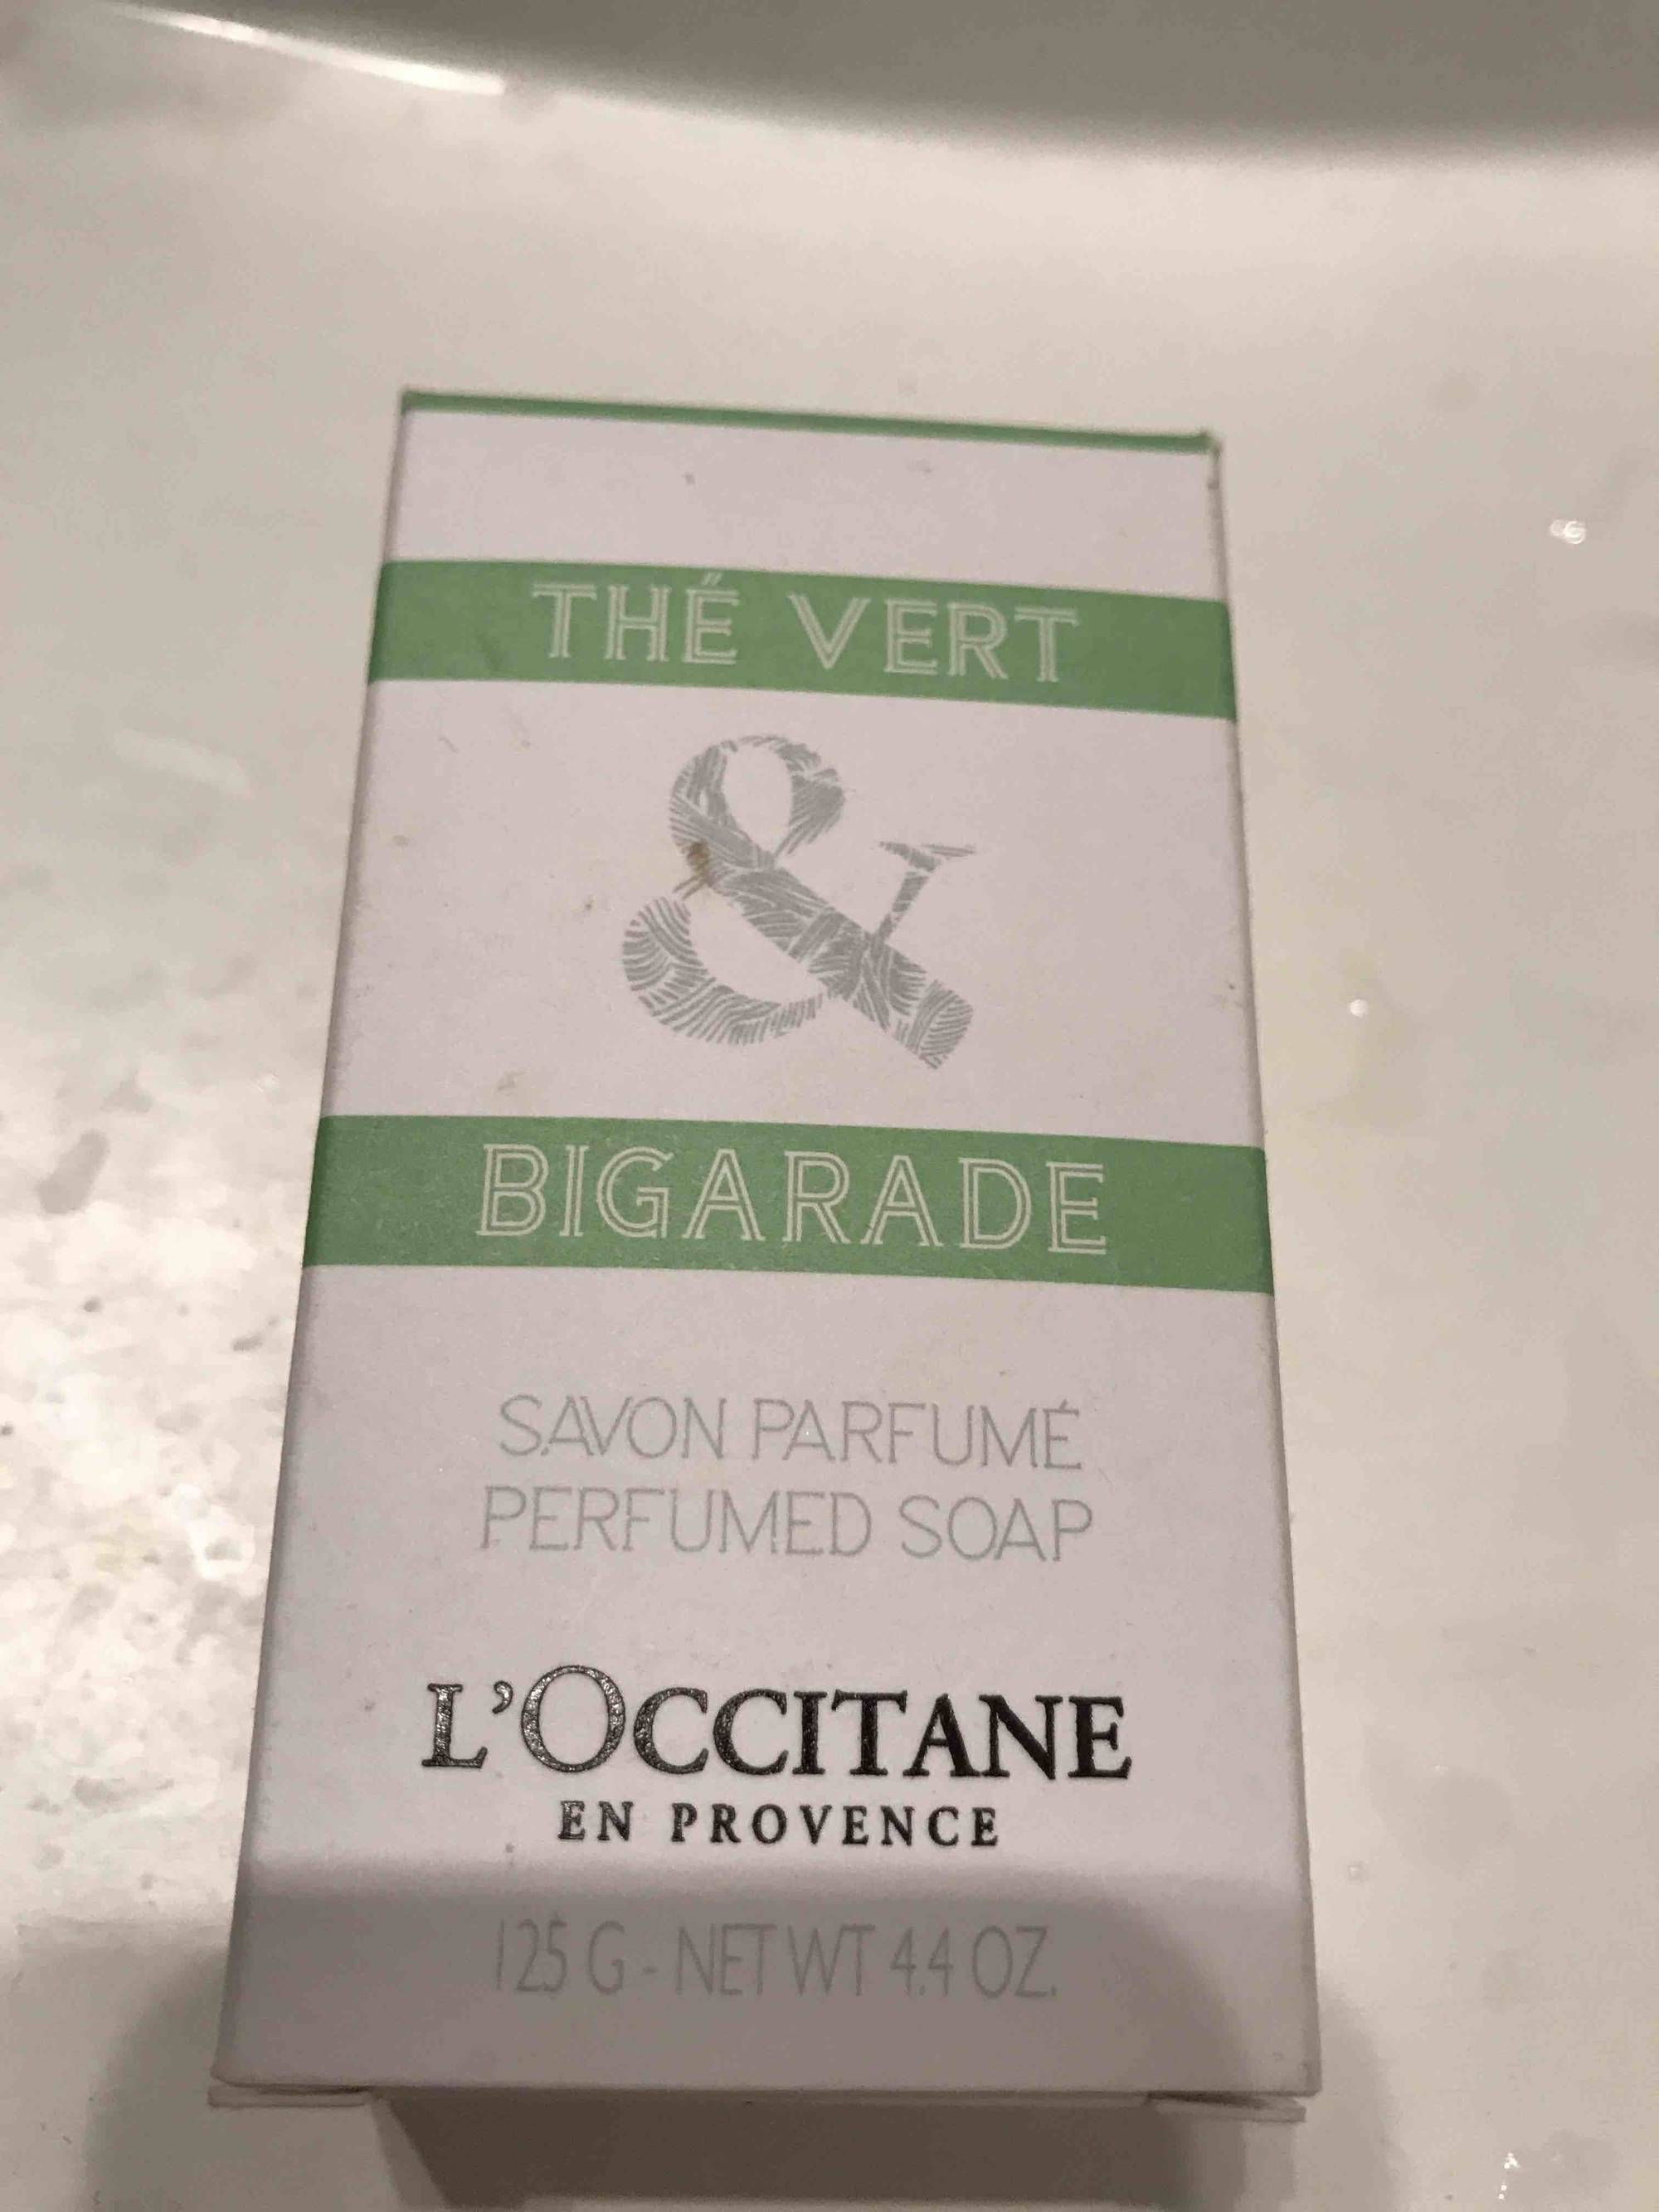 L'OCCITANE - Thé vert & Bigarade - Savon parfumé